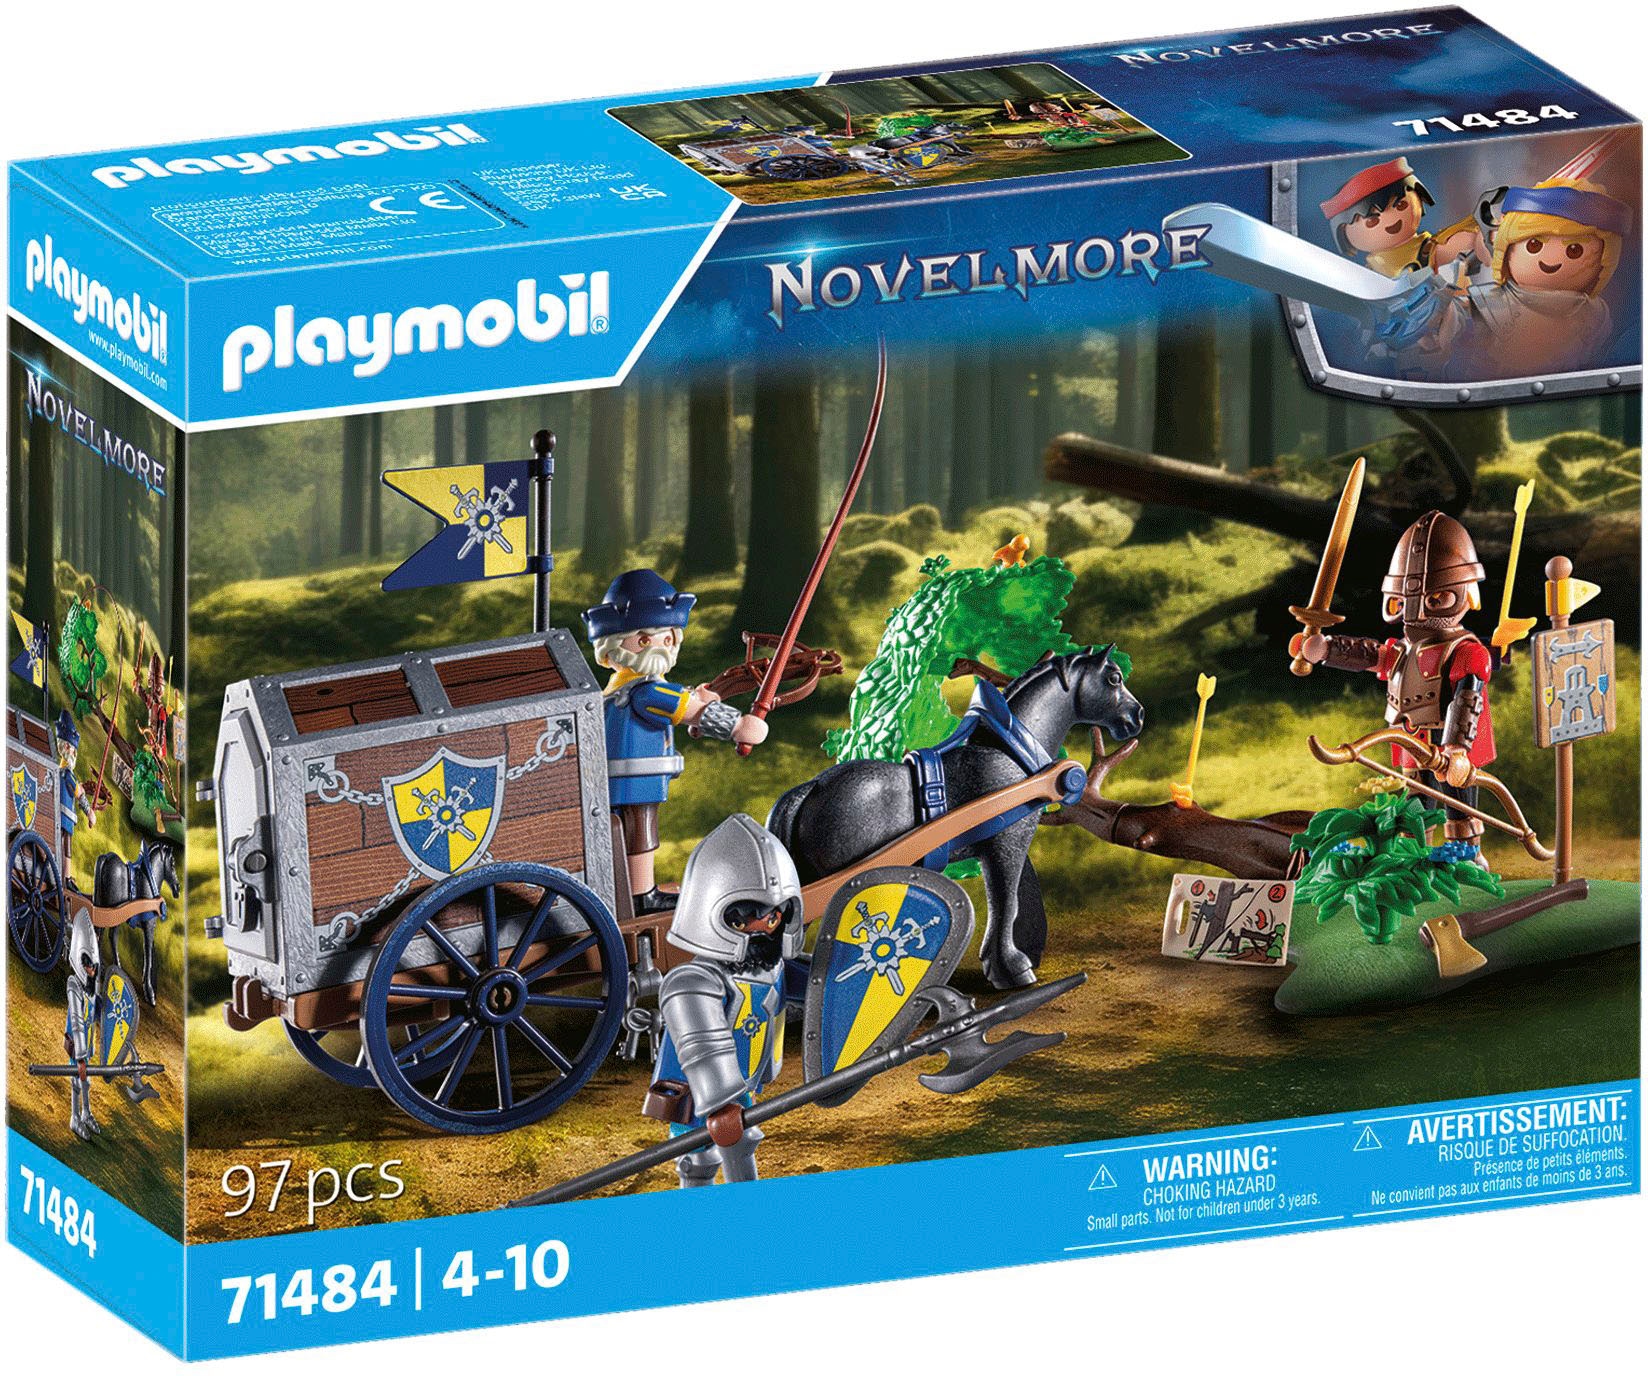 Playmobil® Konstruktions-Spielset »Überfall auf Transportwagen (71484), Novelmore«, (97 St.), Made in Europe